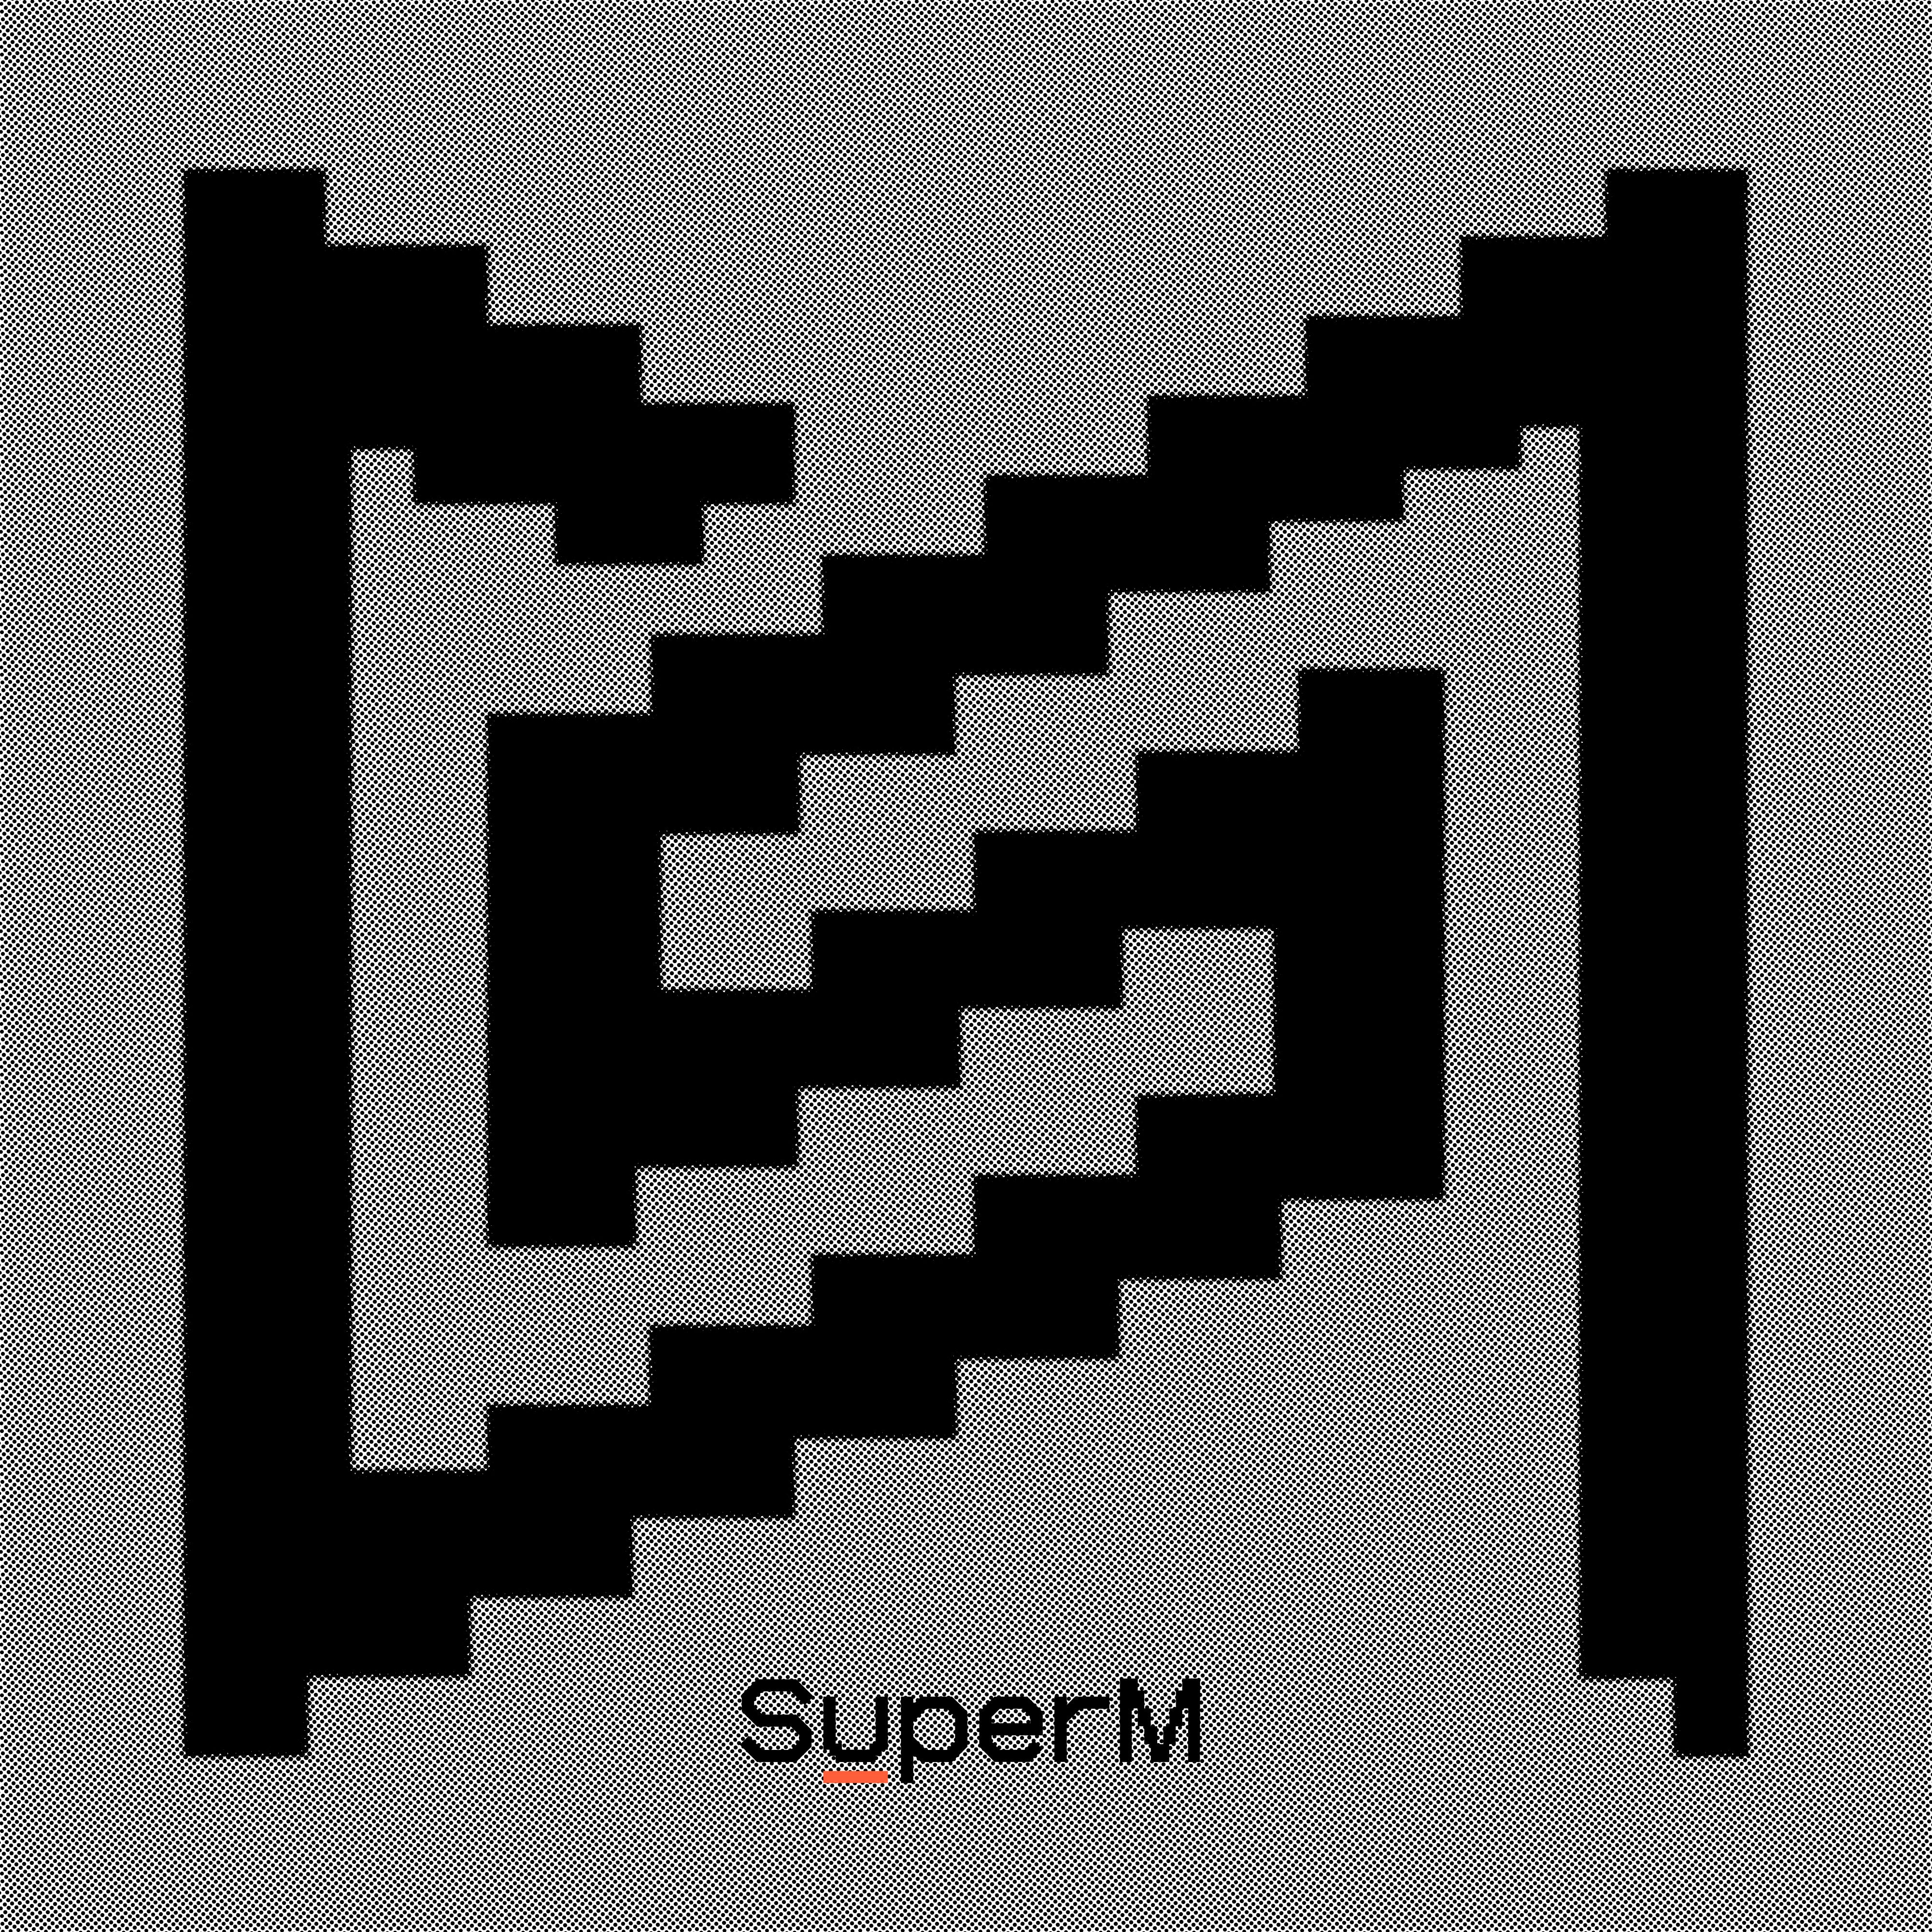 Music Review - SuperM